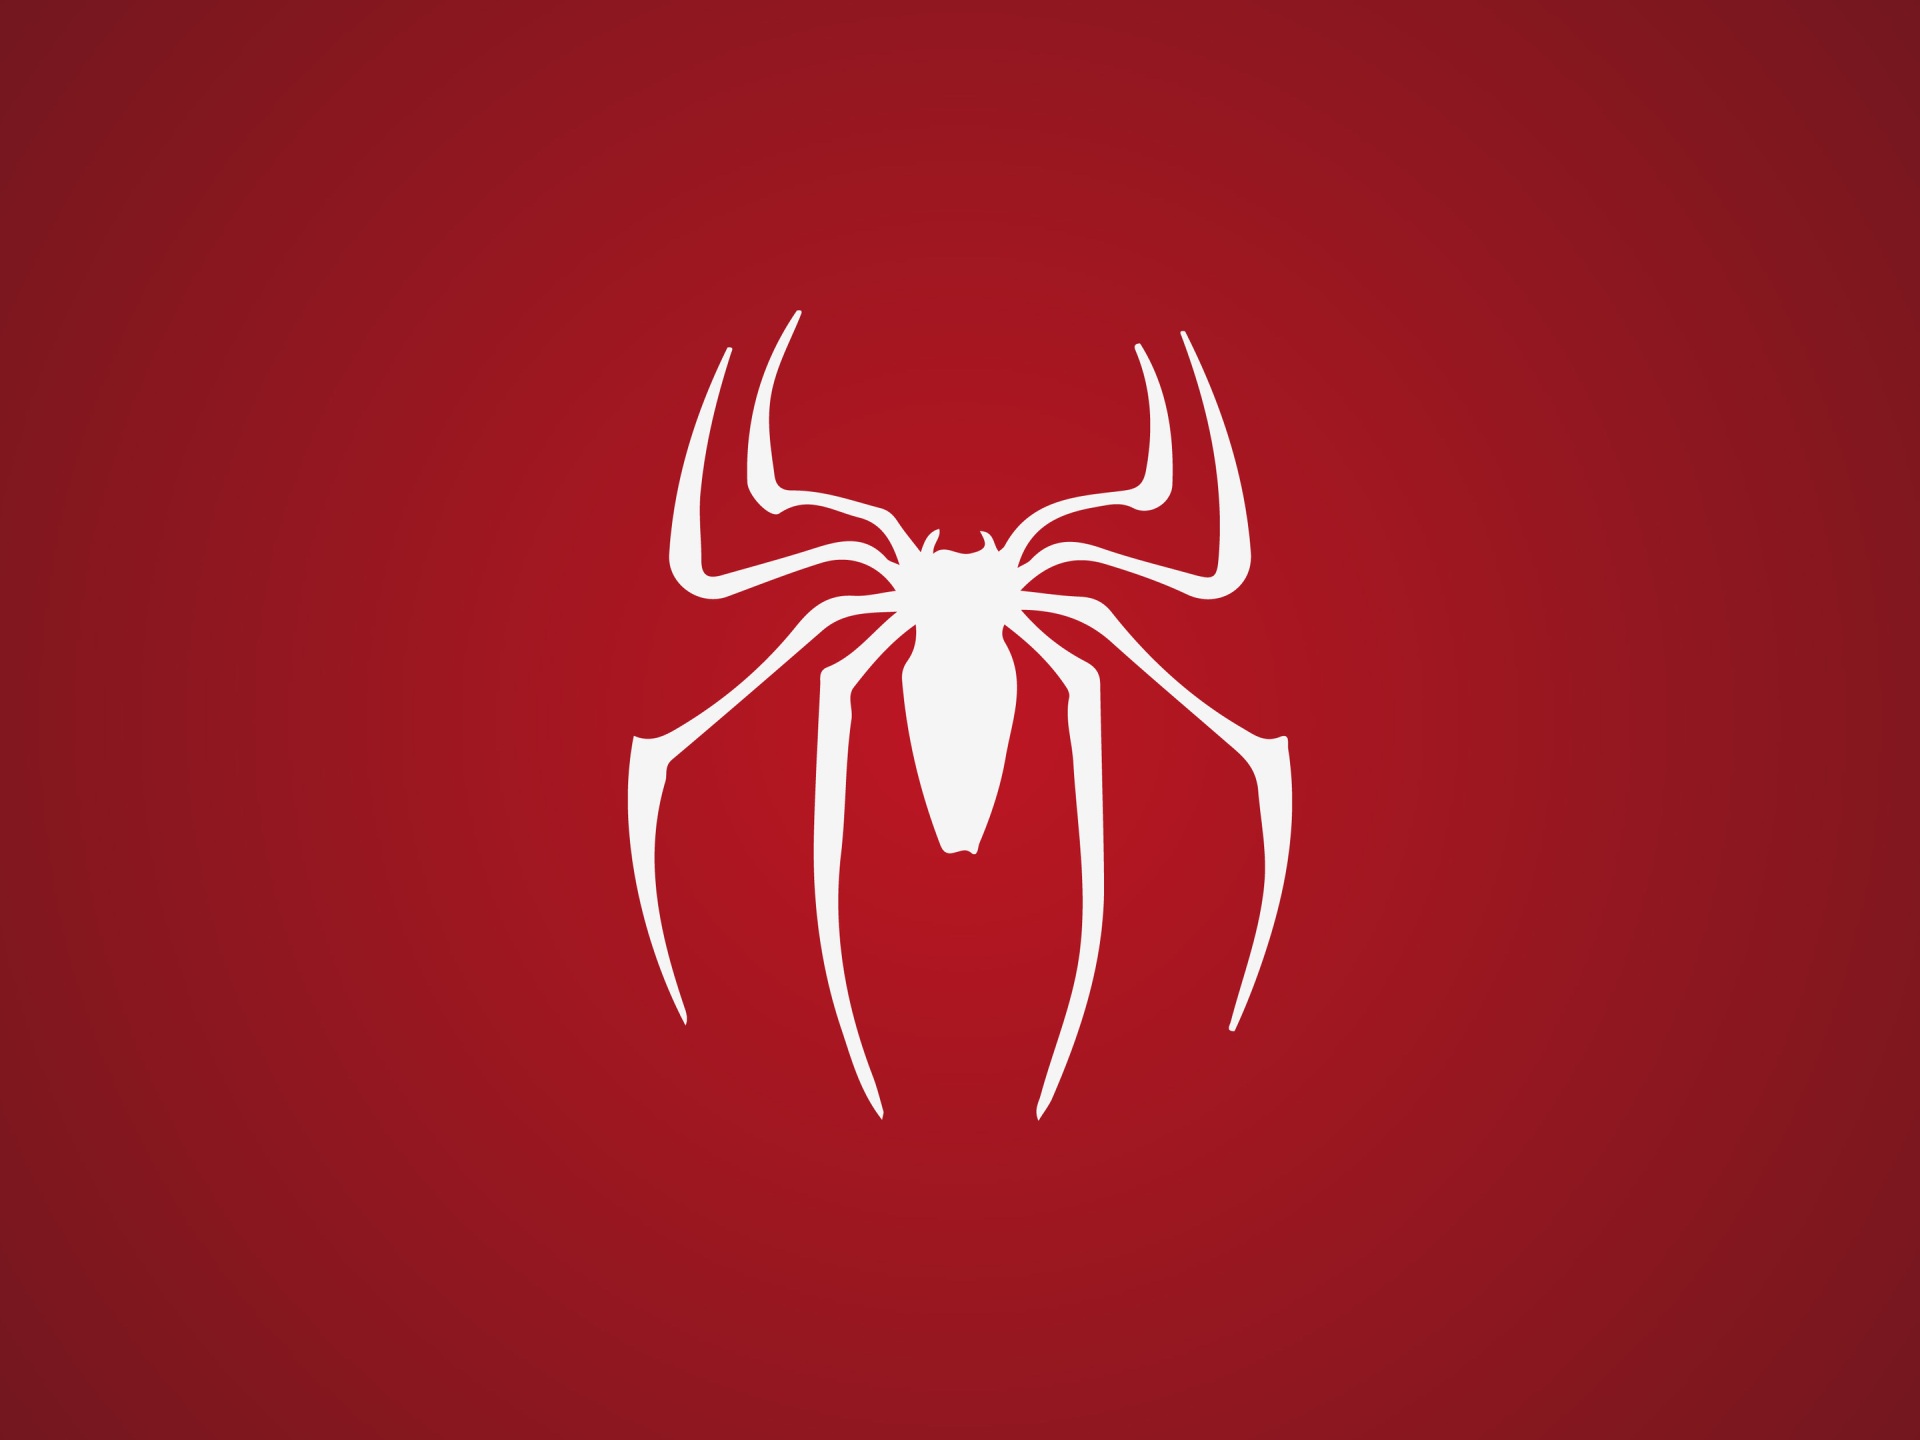 Spiderman Logo 4k - 4k Wallpapers - 40.000+ ipad wallpapers 4k - 4k ...